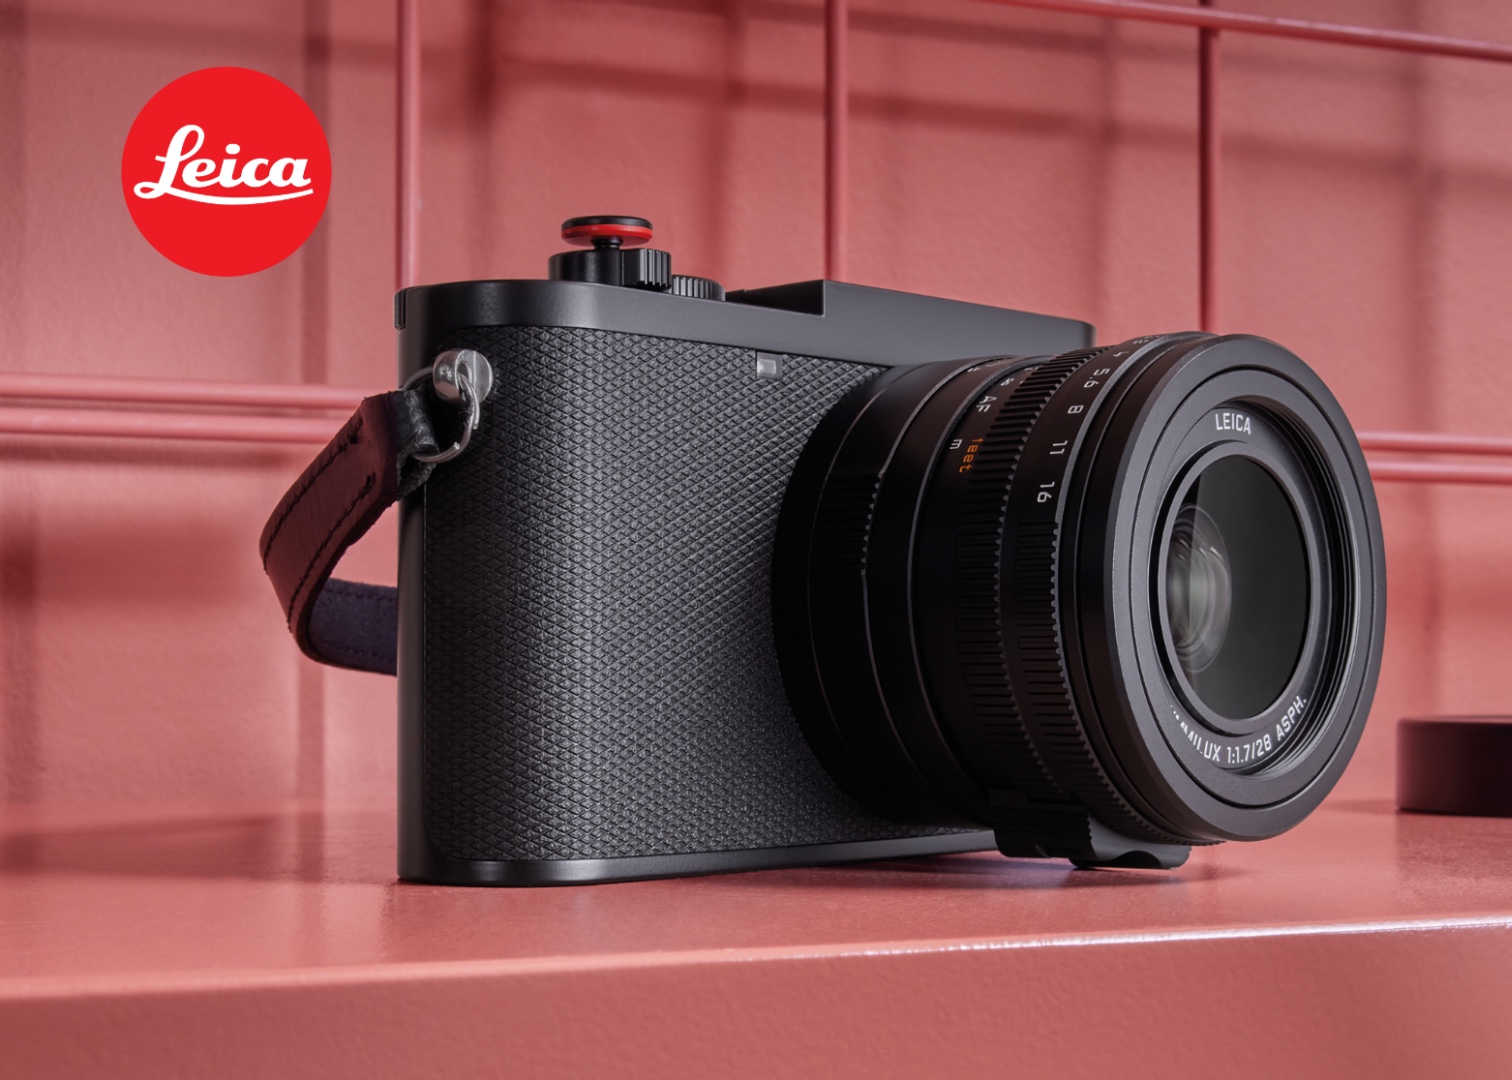 Le superbe Leica Q3